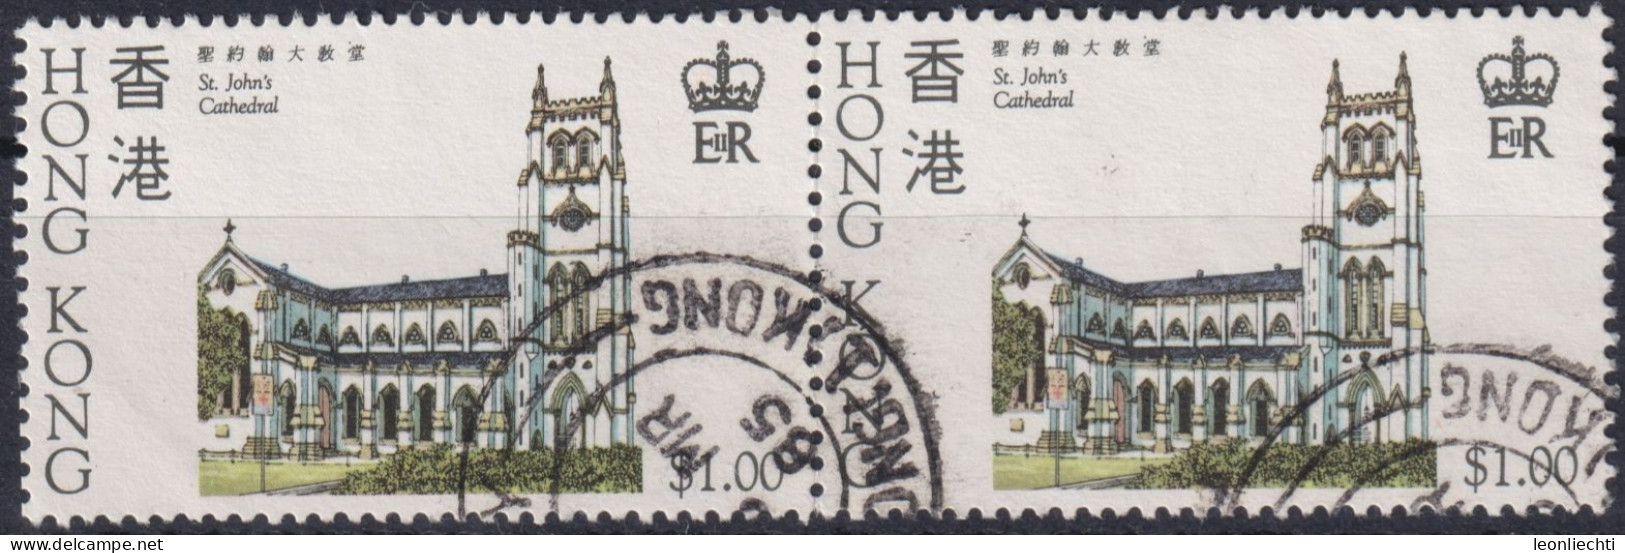 1985 Hong Kong (1997- ° Mi:HK 440, Sn:HK 440, Yt:HK 434,St. John’s Cathedral, Historical Buildings Of Hong Kong - Usati